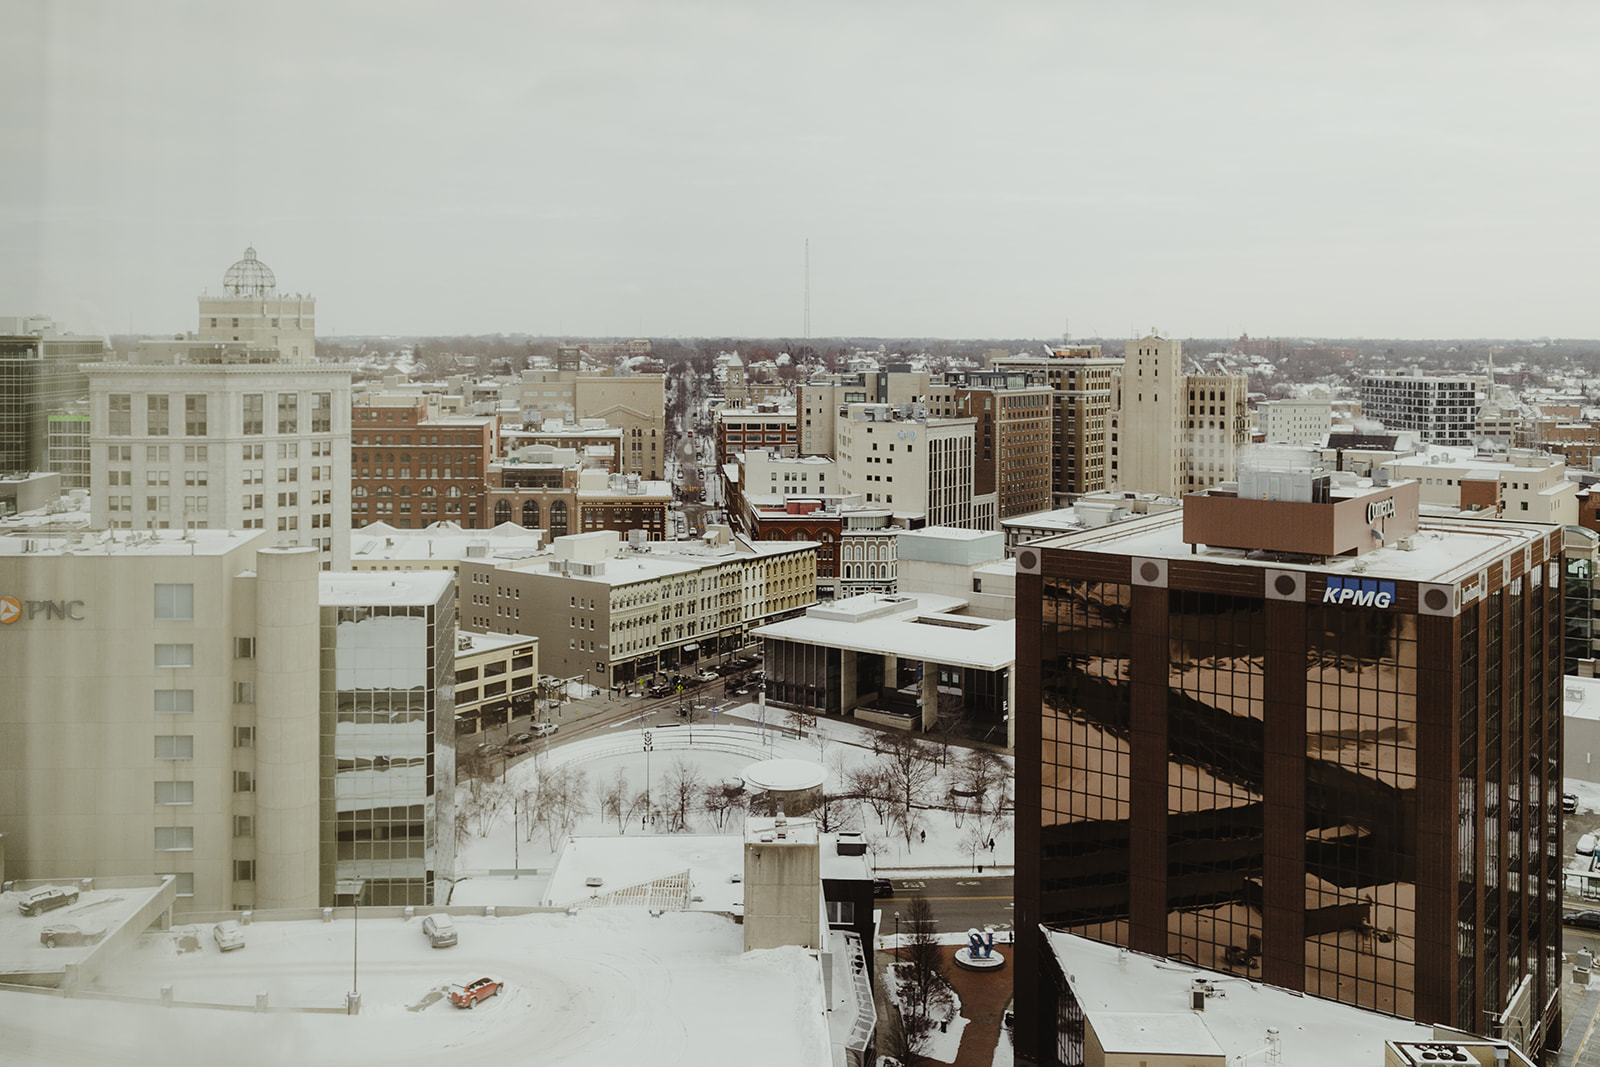 Grand Rapids, Michigan on a snowy January day